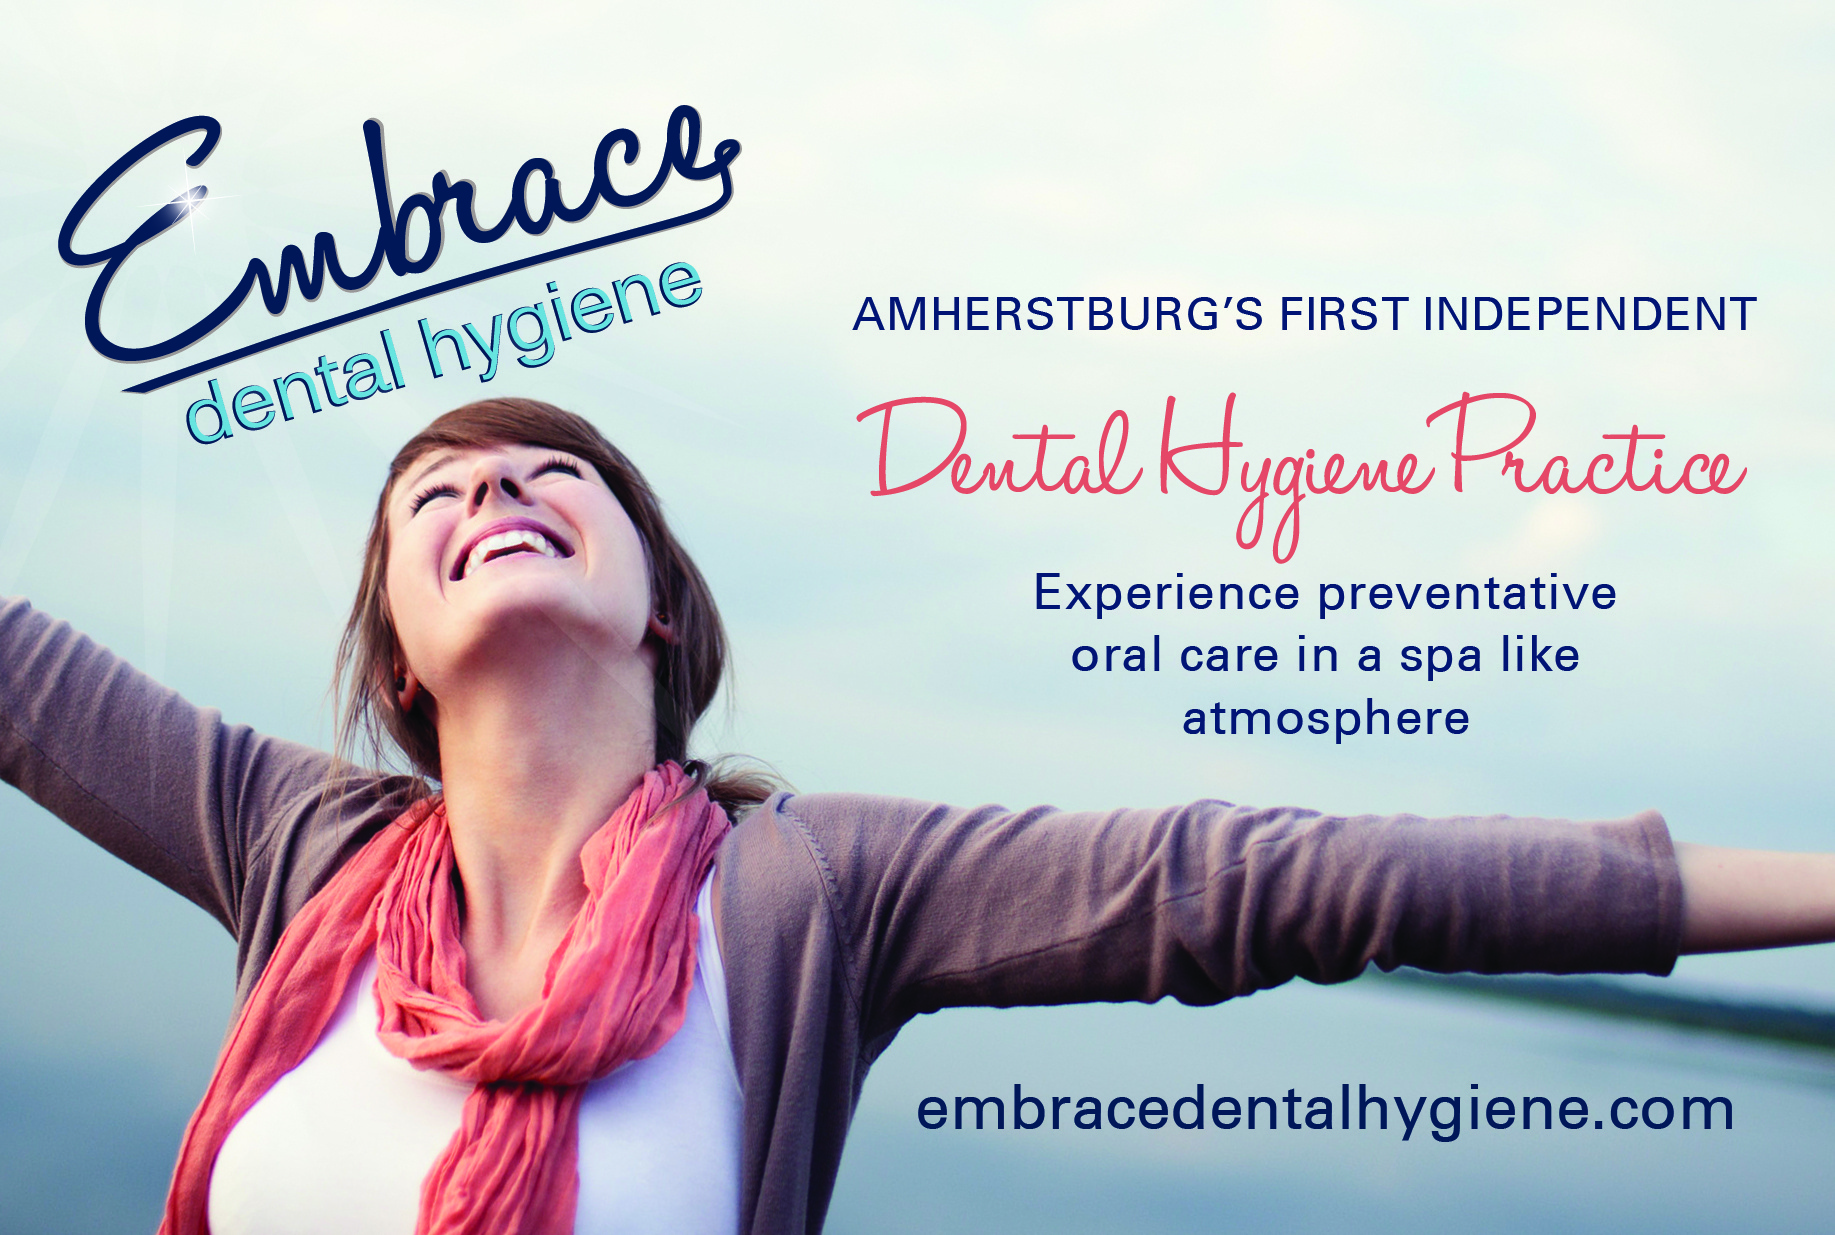 embrace dental hygiene amherstburg's first independent dental hygiene practice